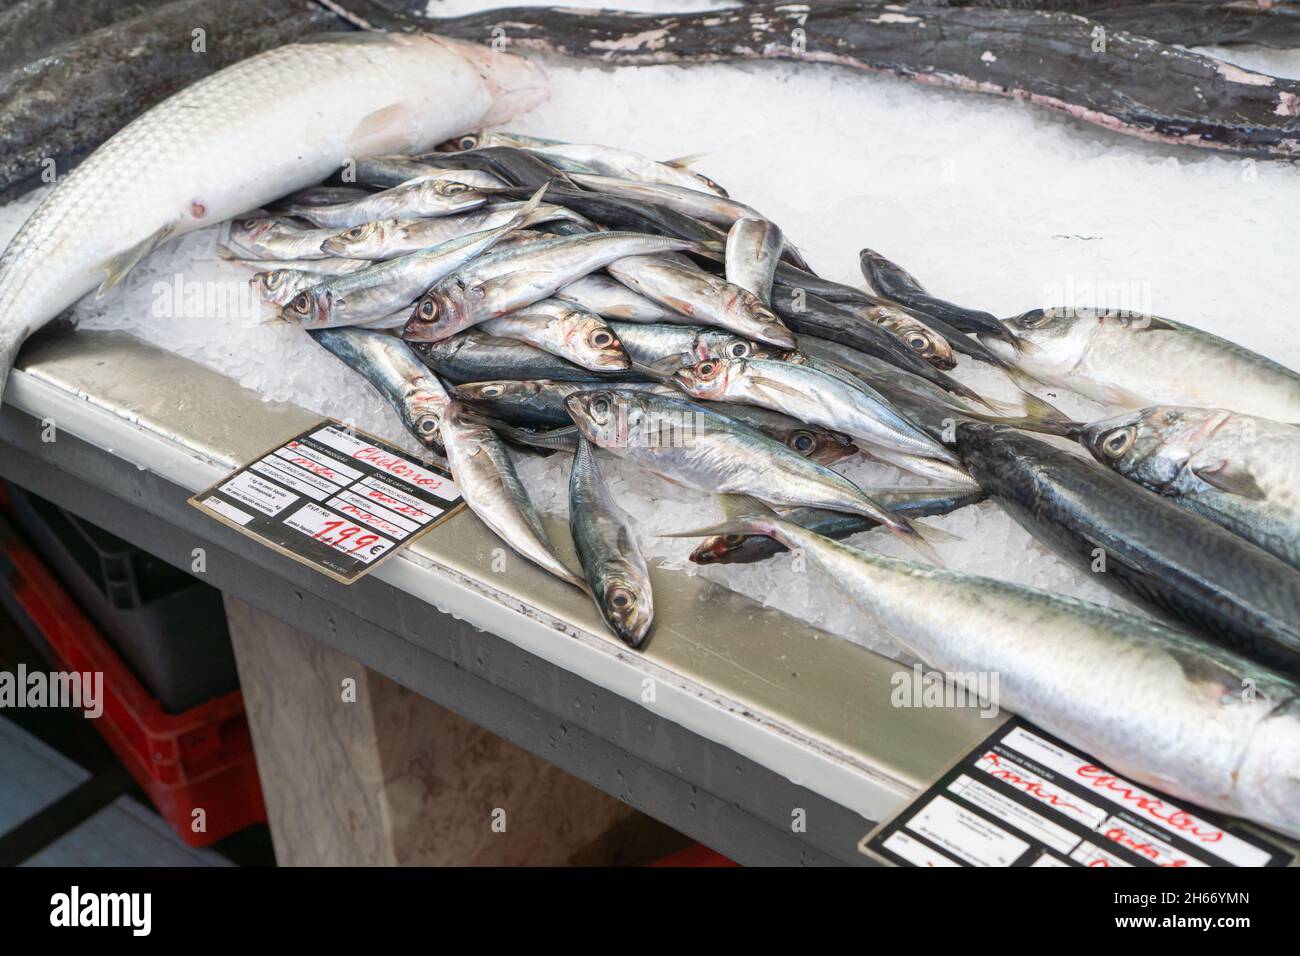 Closeup shot of Freshly caught fish at the fish market Stock Photo